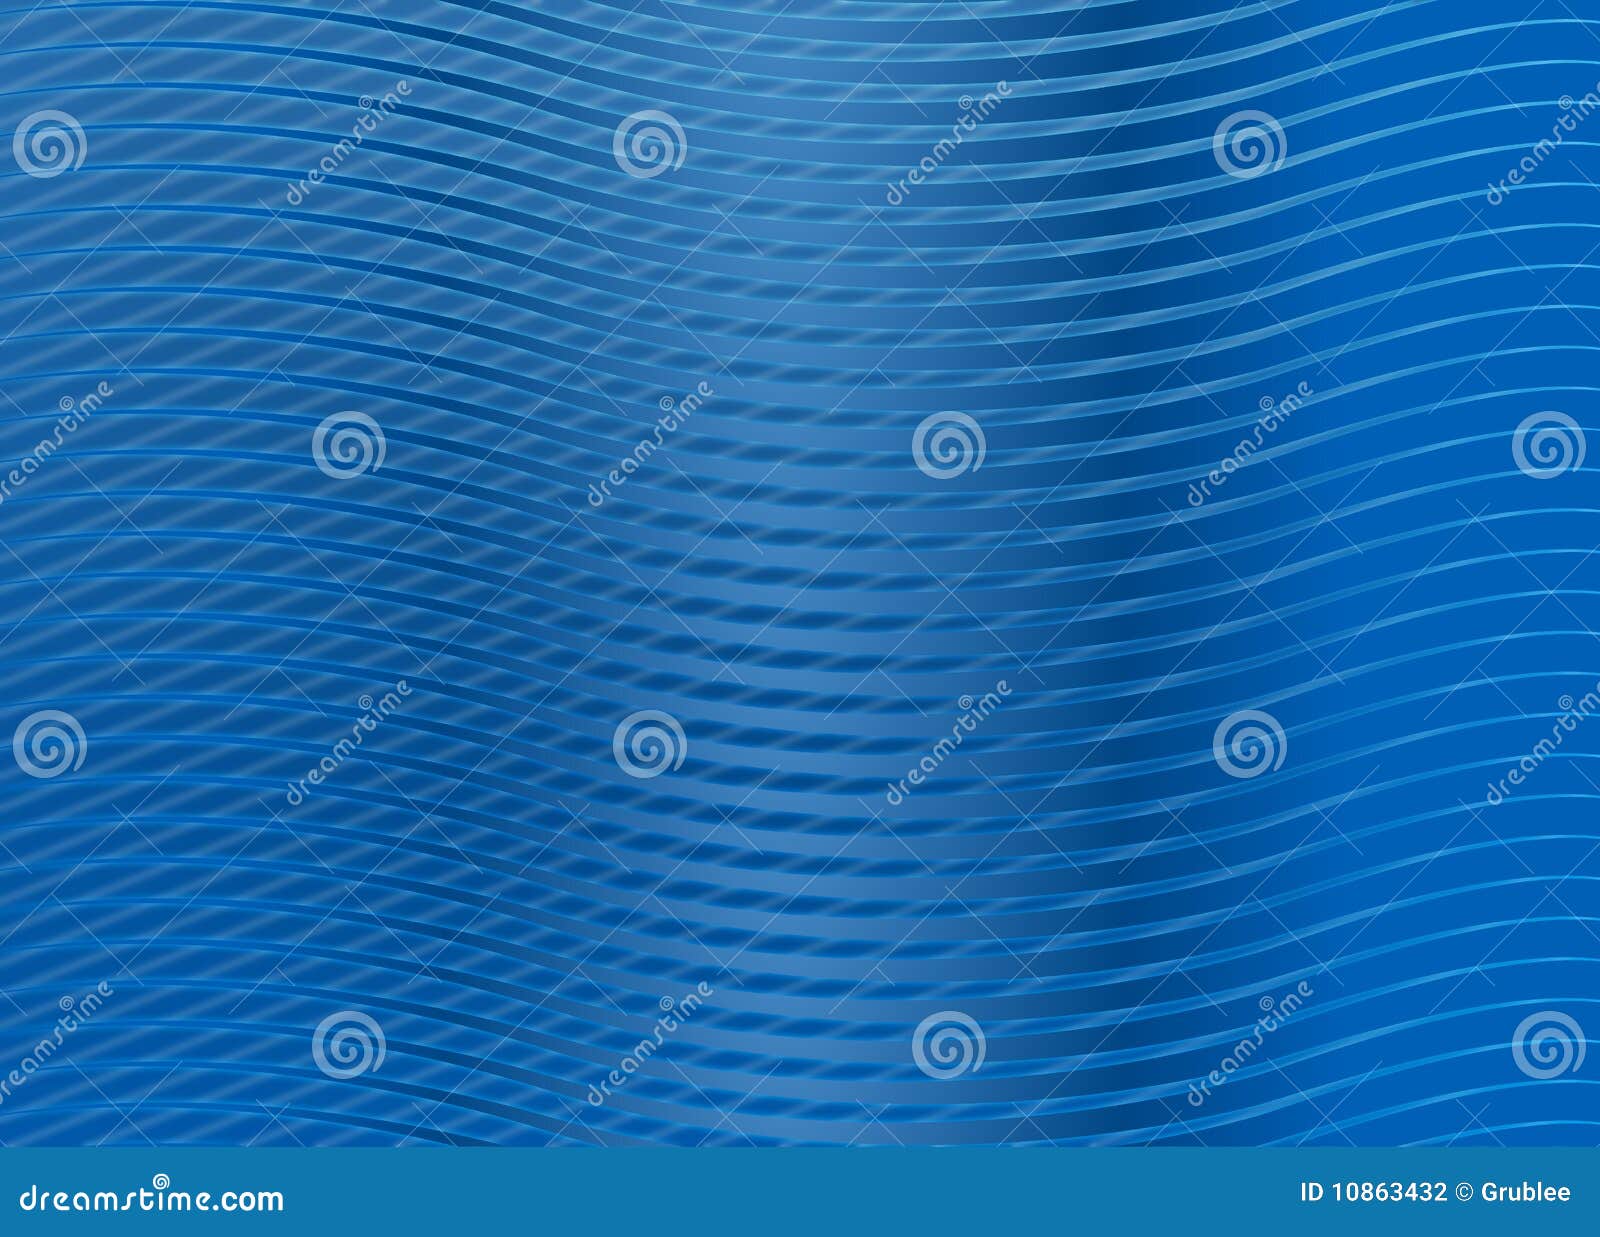 Thin waves background stock illustration. Illustration of wallpaper ...